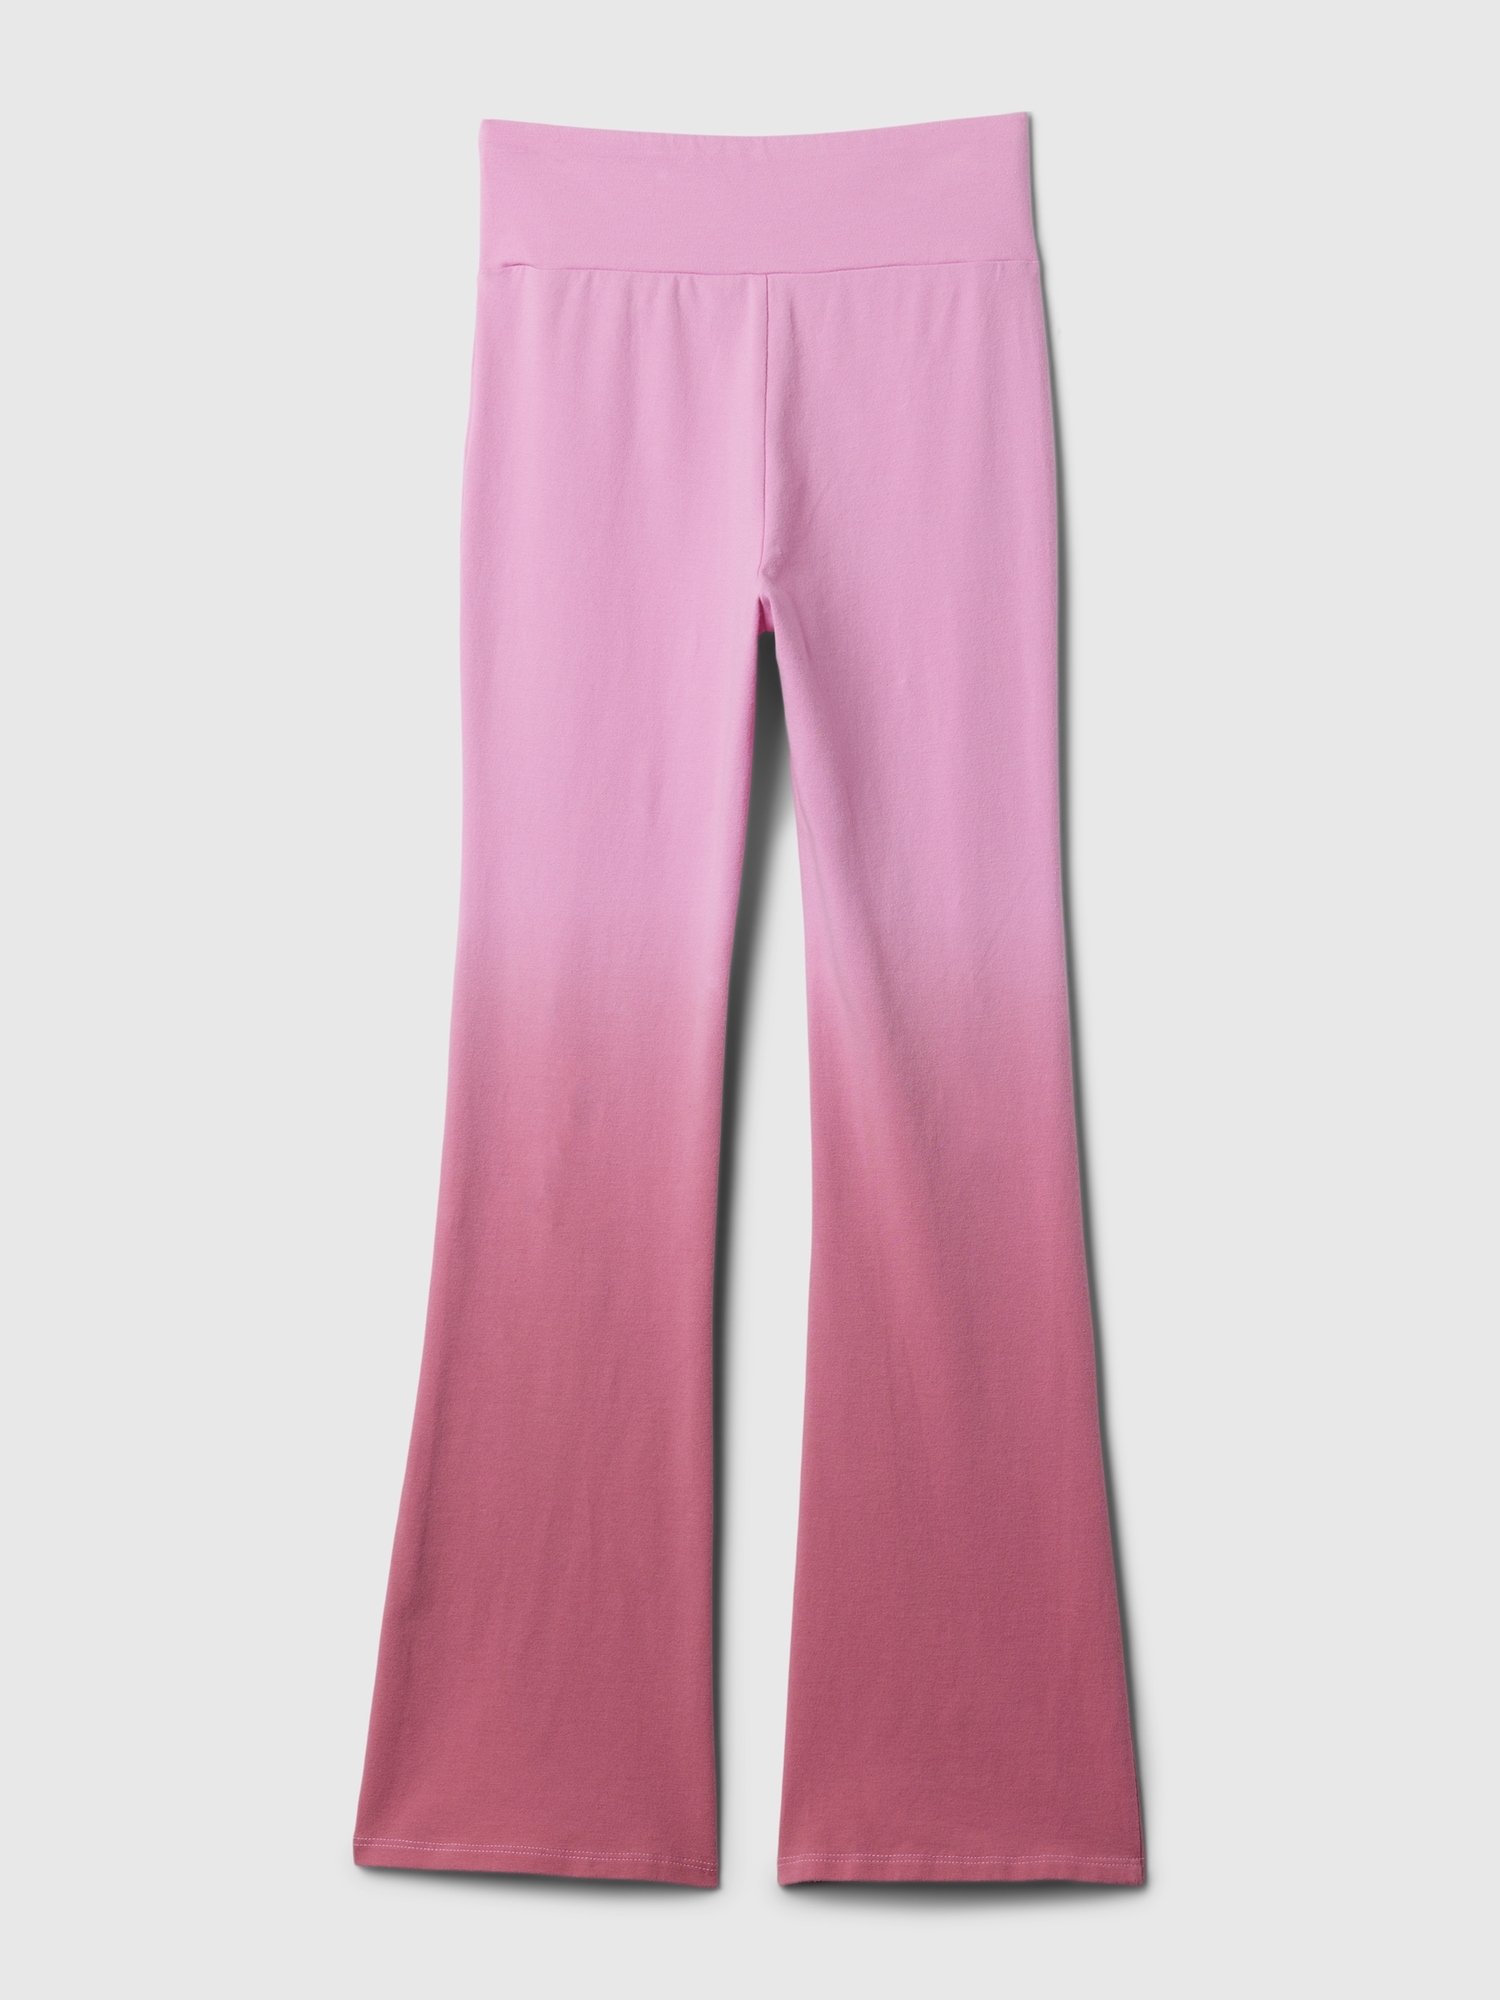 Cute Graphic Flare Leggings Loose Yoga Pants for Women Girls Pink